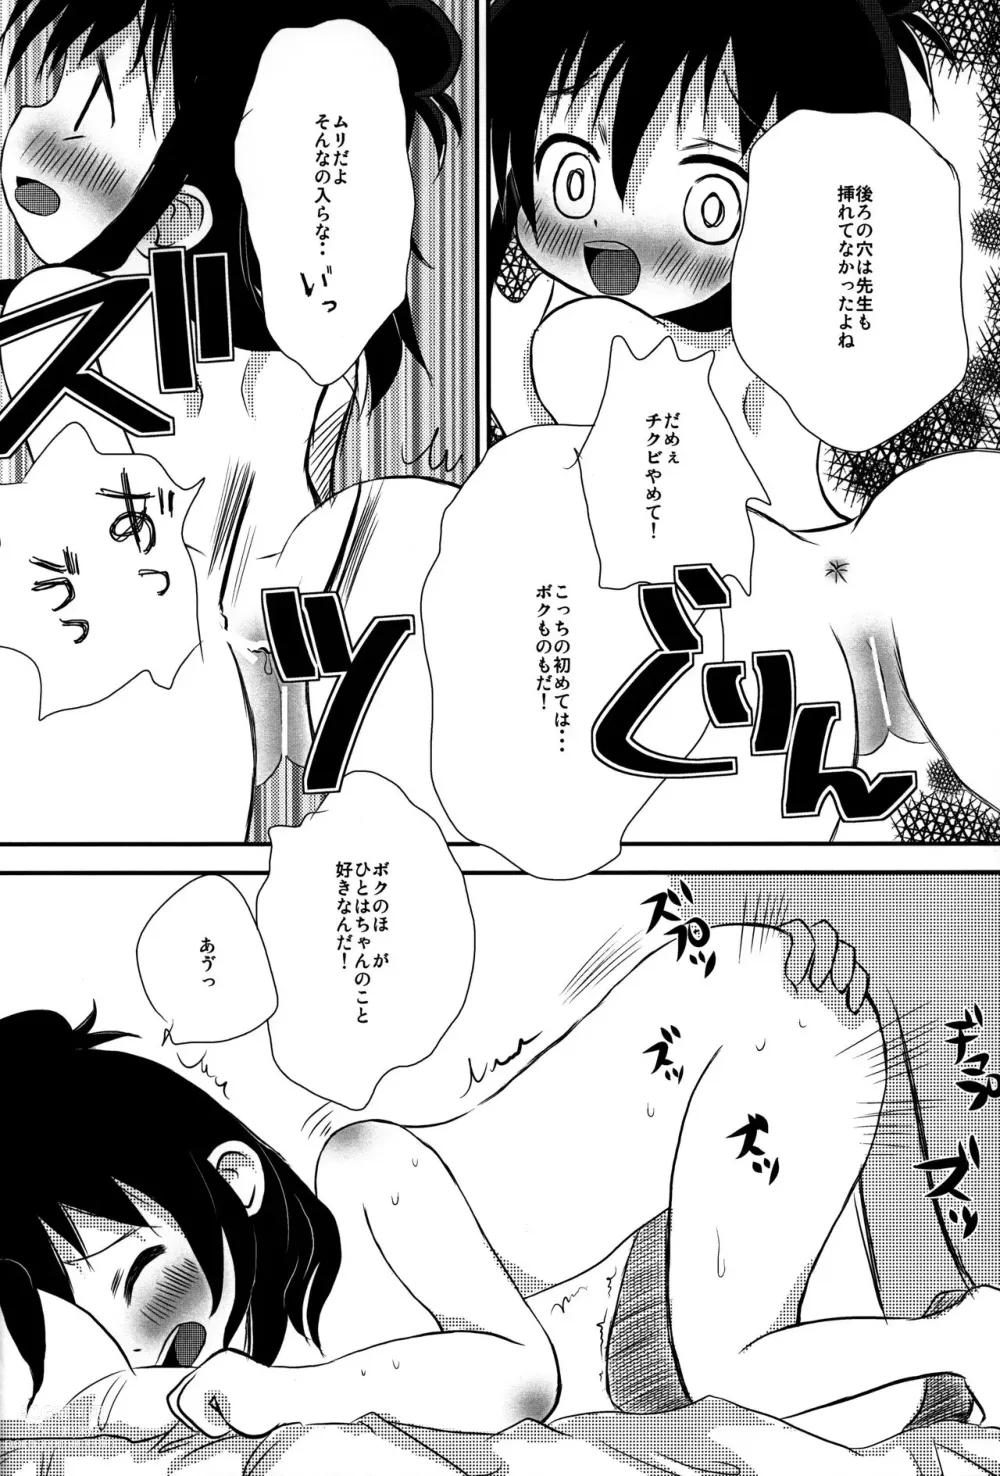 Page 7 of doujinshi Chikubi ga Tatta!